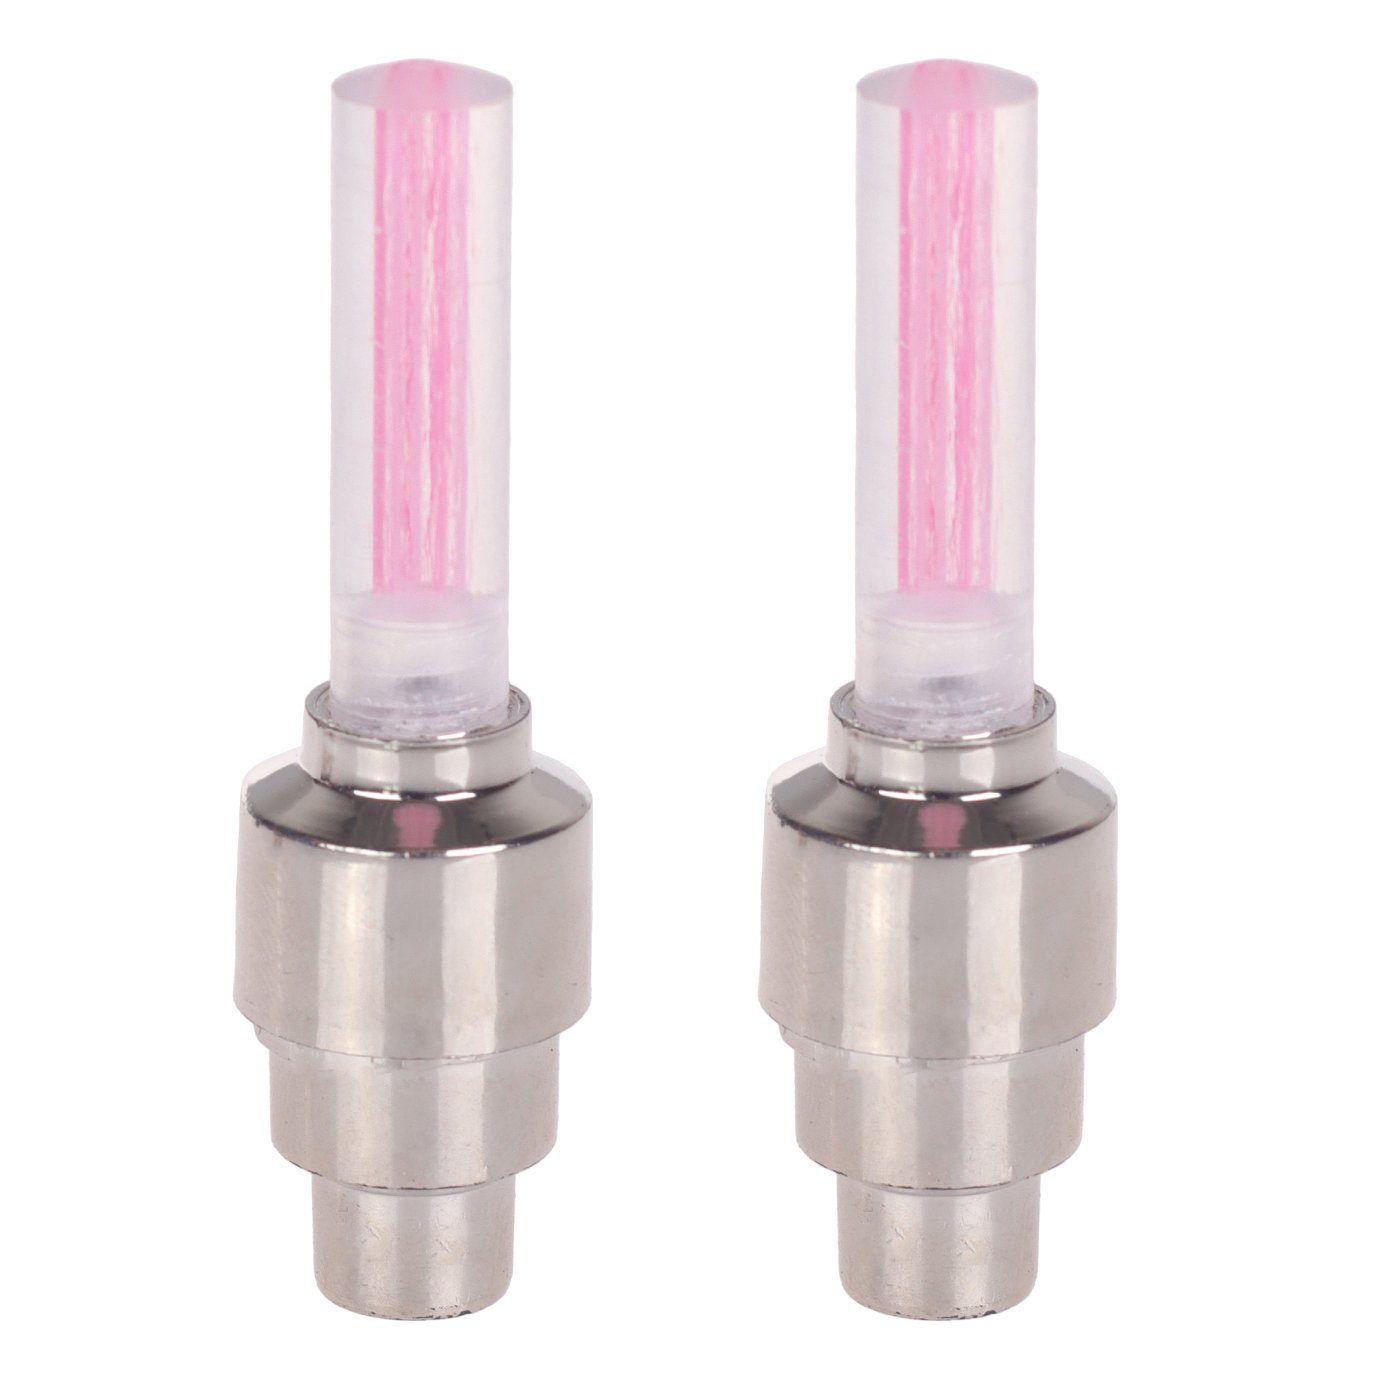 BENSON Fahrradbeleuchtung Fahrradlampe Ventillampe paarweise inkl batterien Pink Wasserfest